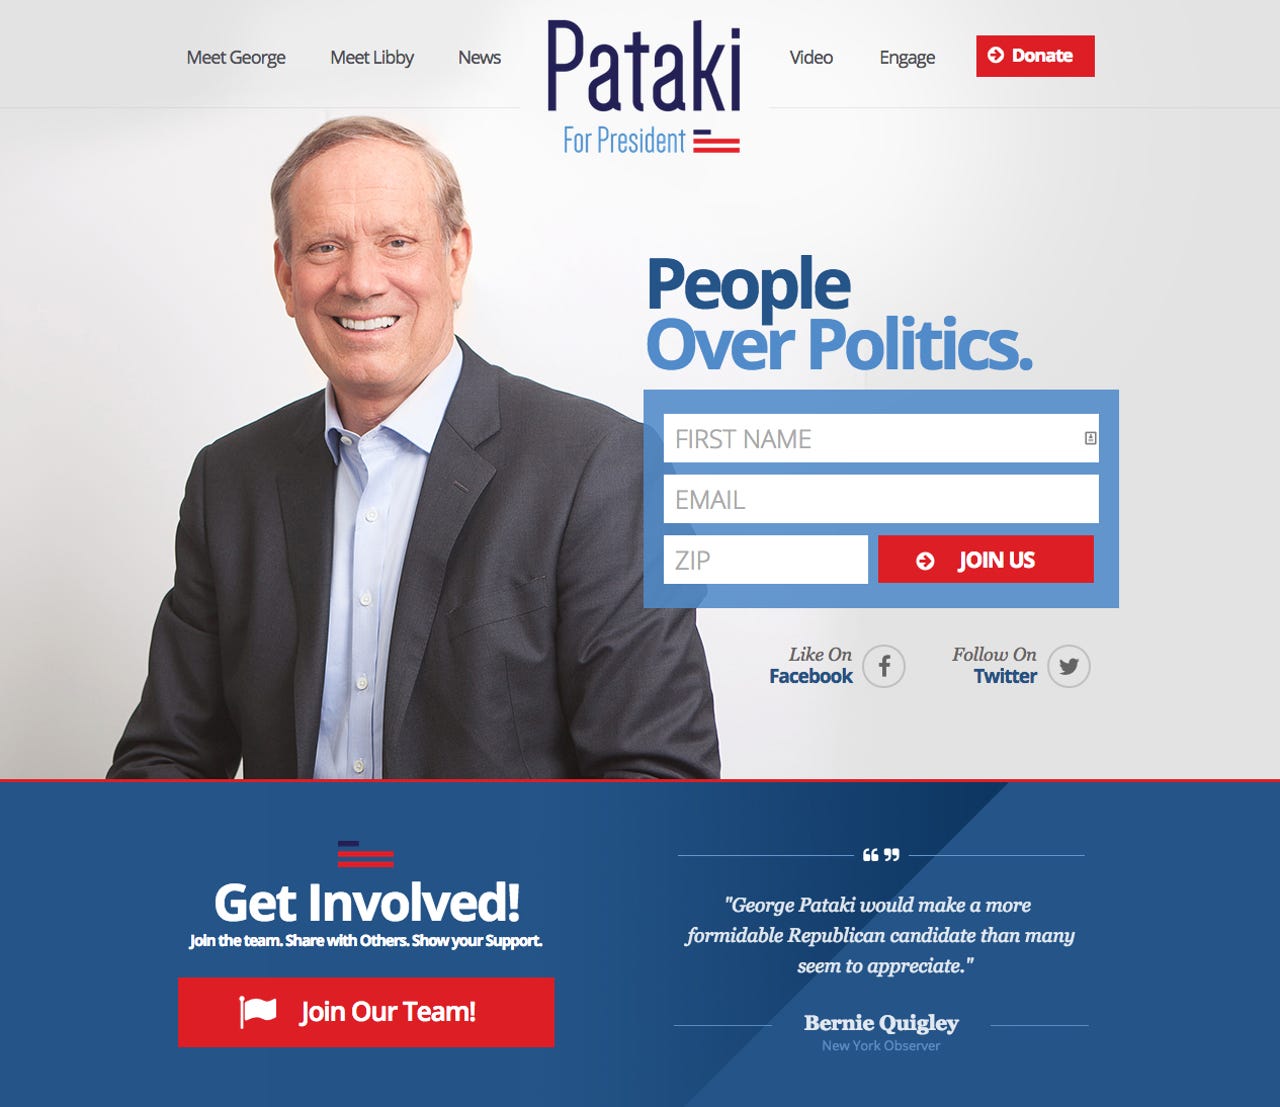 george-pataki-for-president-2016-people-over-politics-2015-07-23-21-30-56.jpg